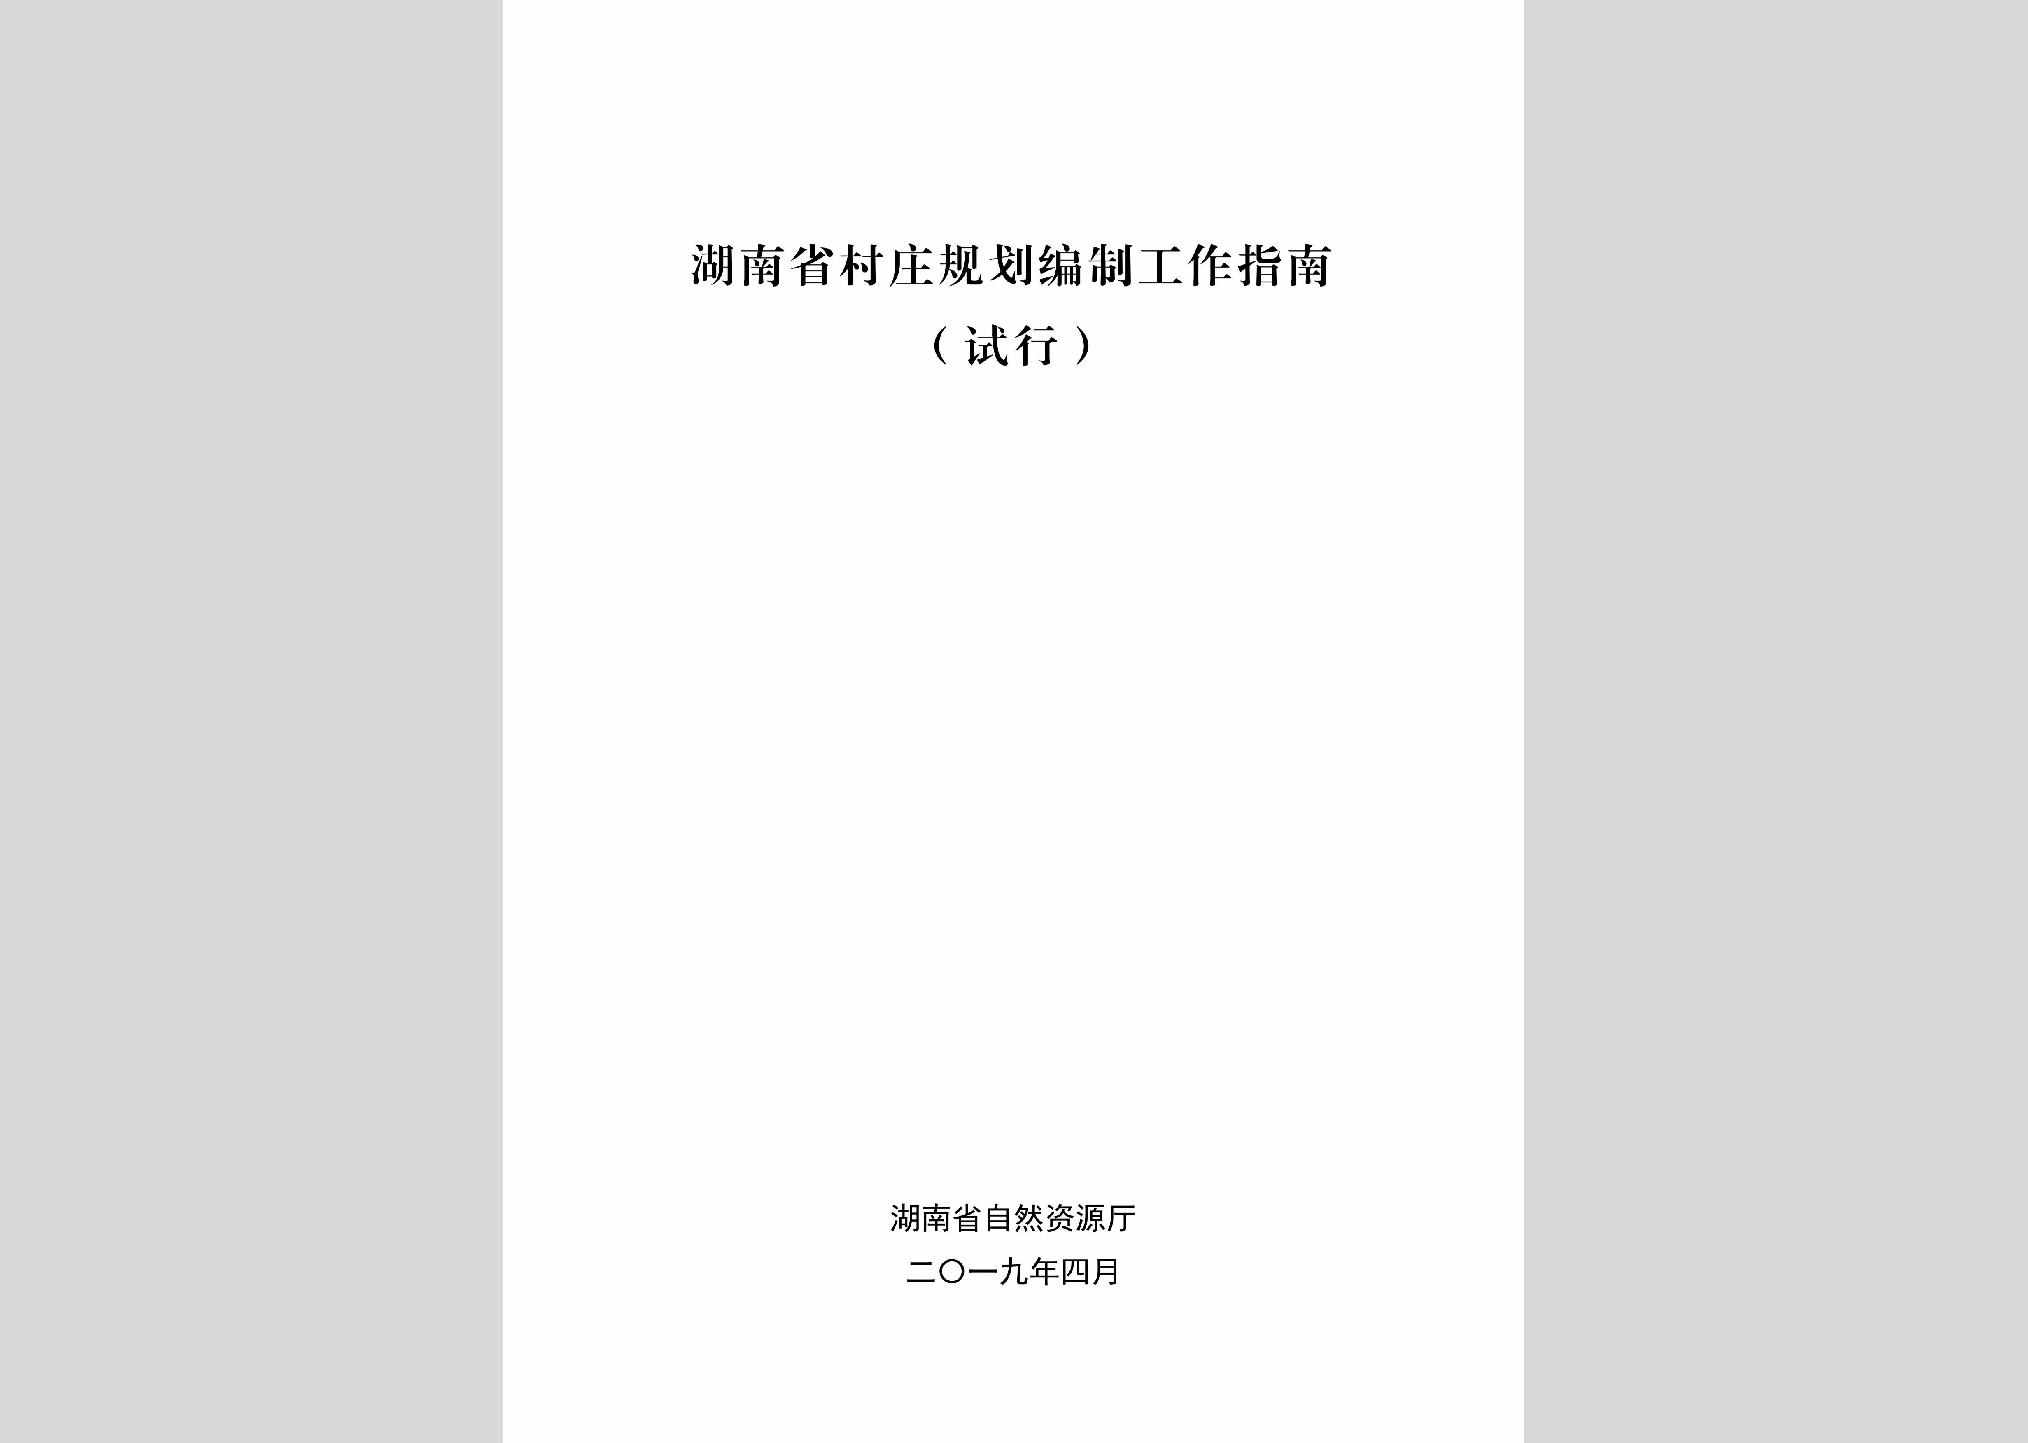 CZGHBZGZ：湖南省村庄规划编制工作指南（试行）